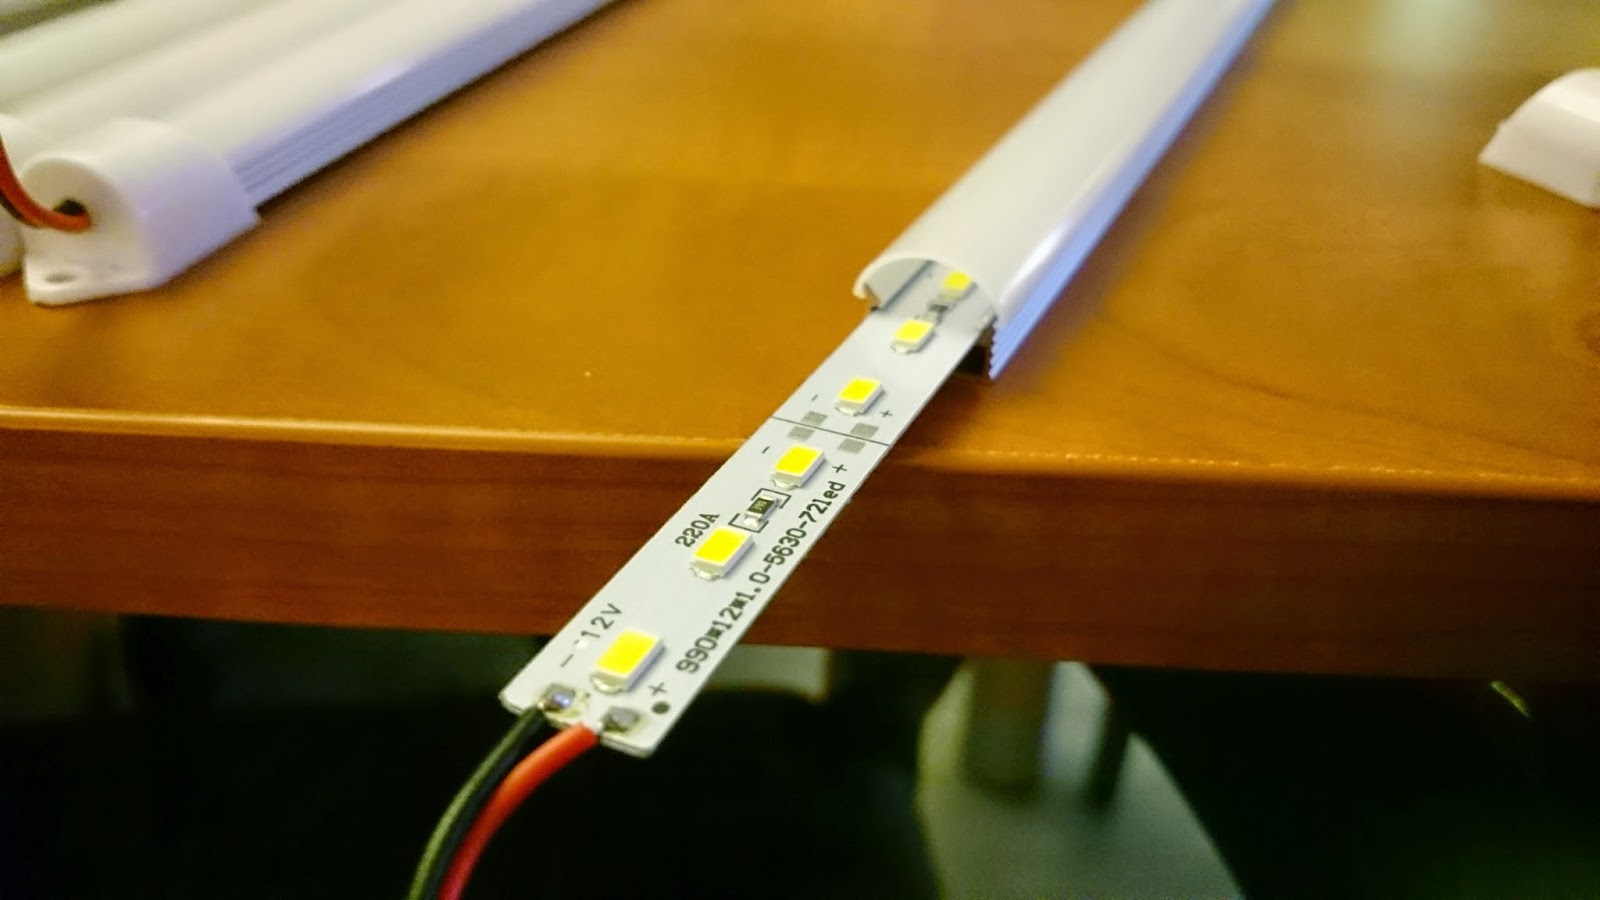 ESP8266 Part 5 of Ikea Lamp hacks - Intermittent Technology